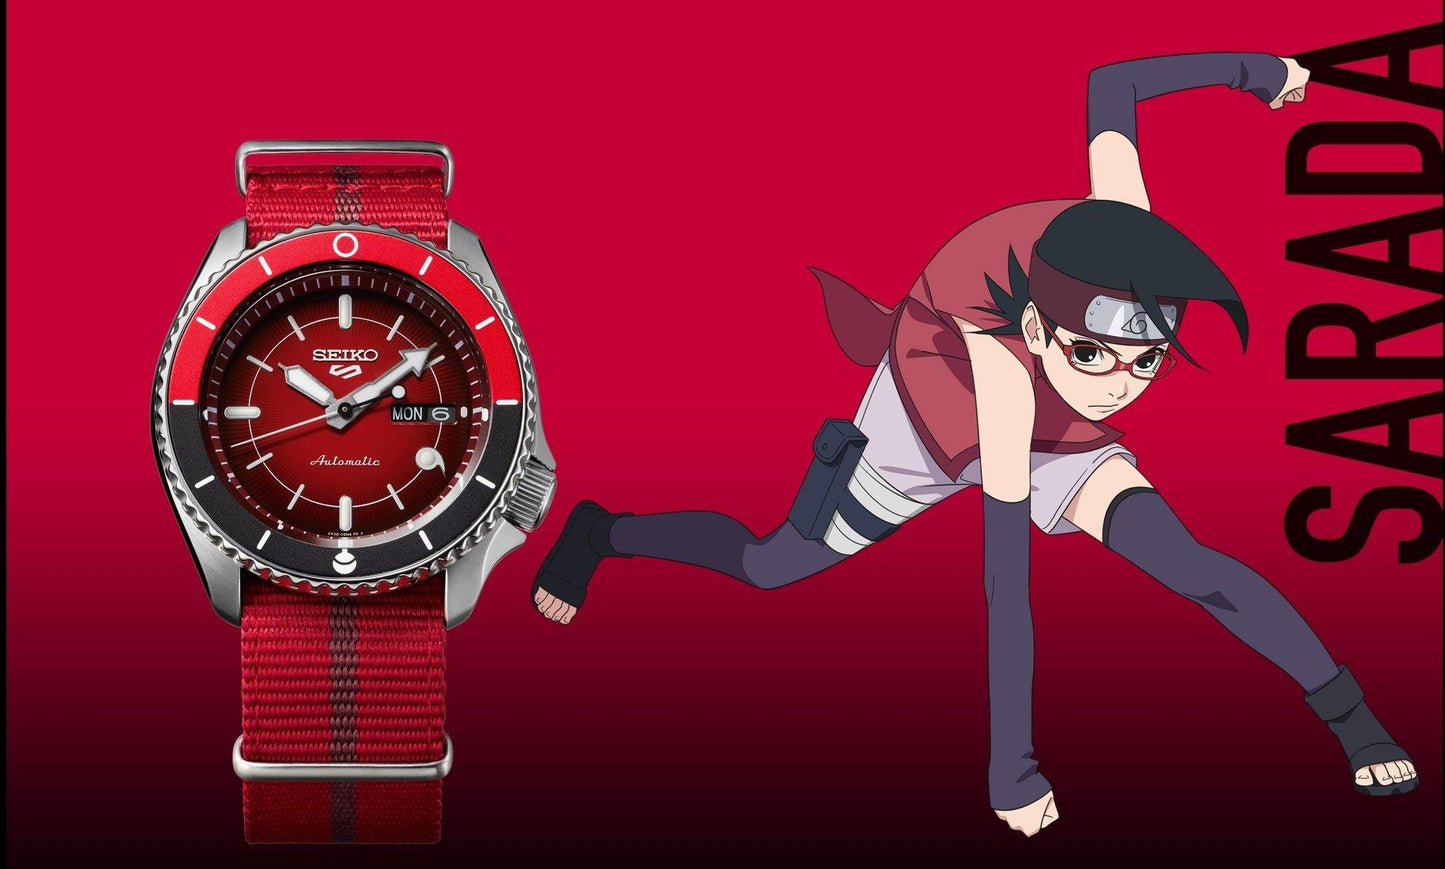 Seiko 5 Sports 100M LE Boruto's Sarada Automatic Men's Watch Red Dial Nylon Strap SRPF67K1 - Diligence1International